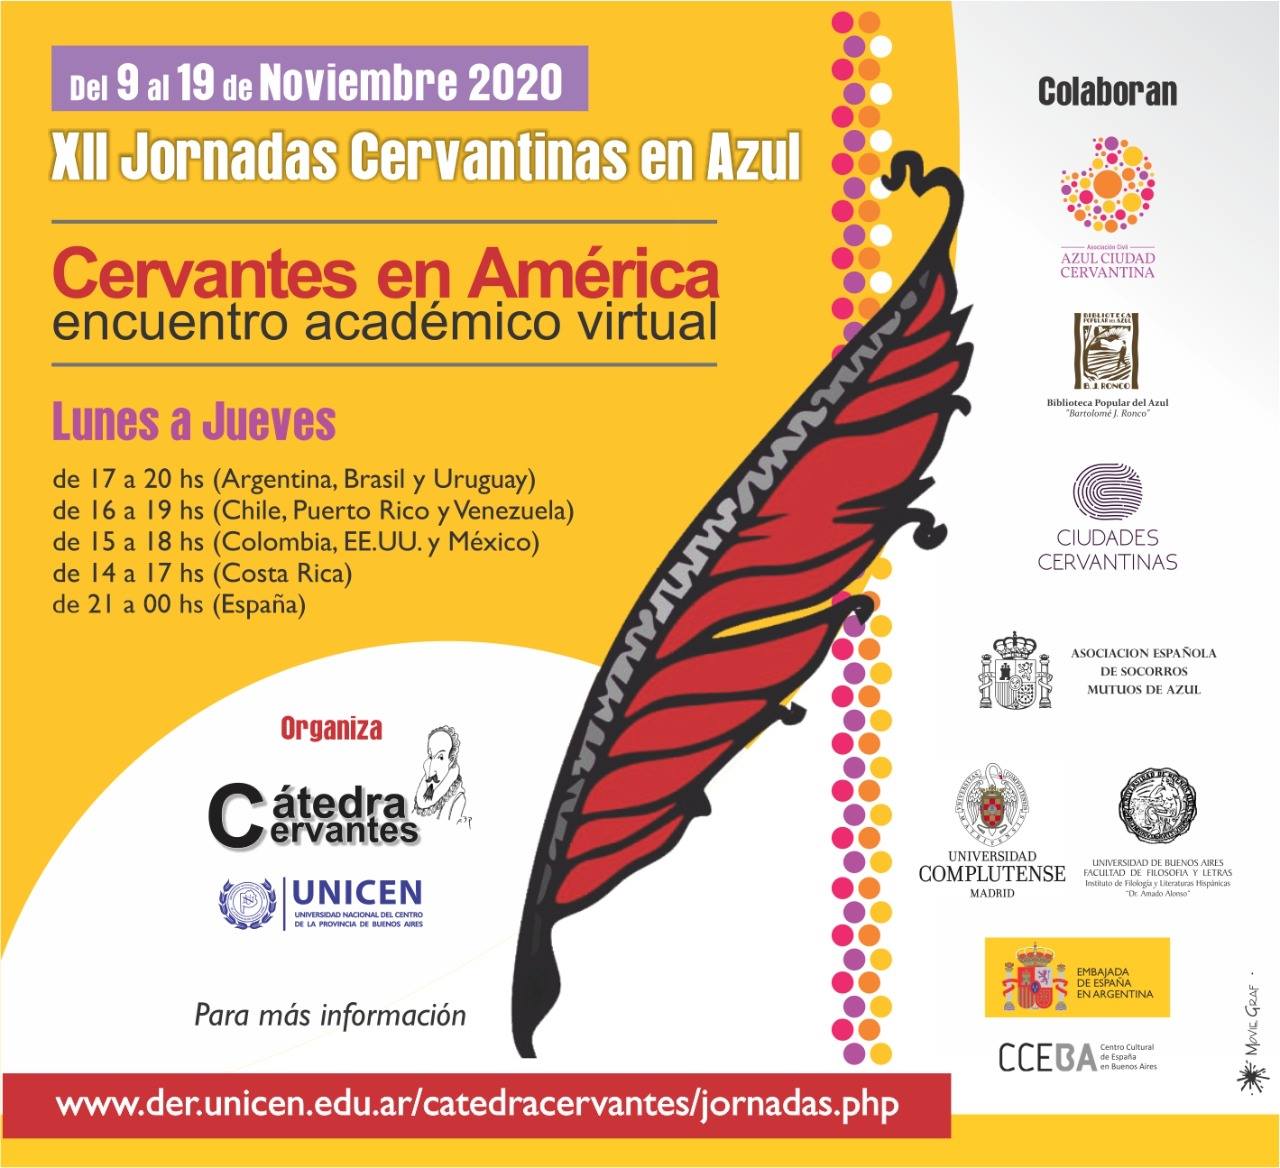 XII Jornadas Cervantinas en Azul: Cervantes en América (encuentro académico virtual)